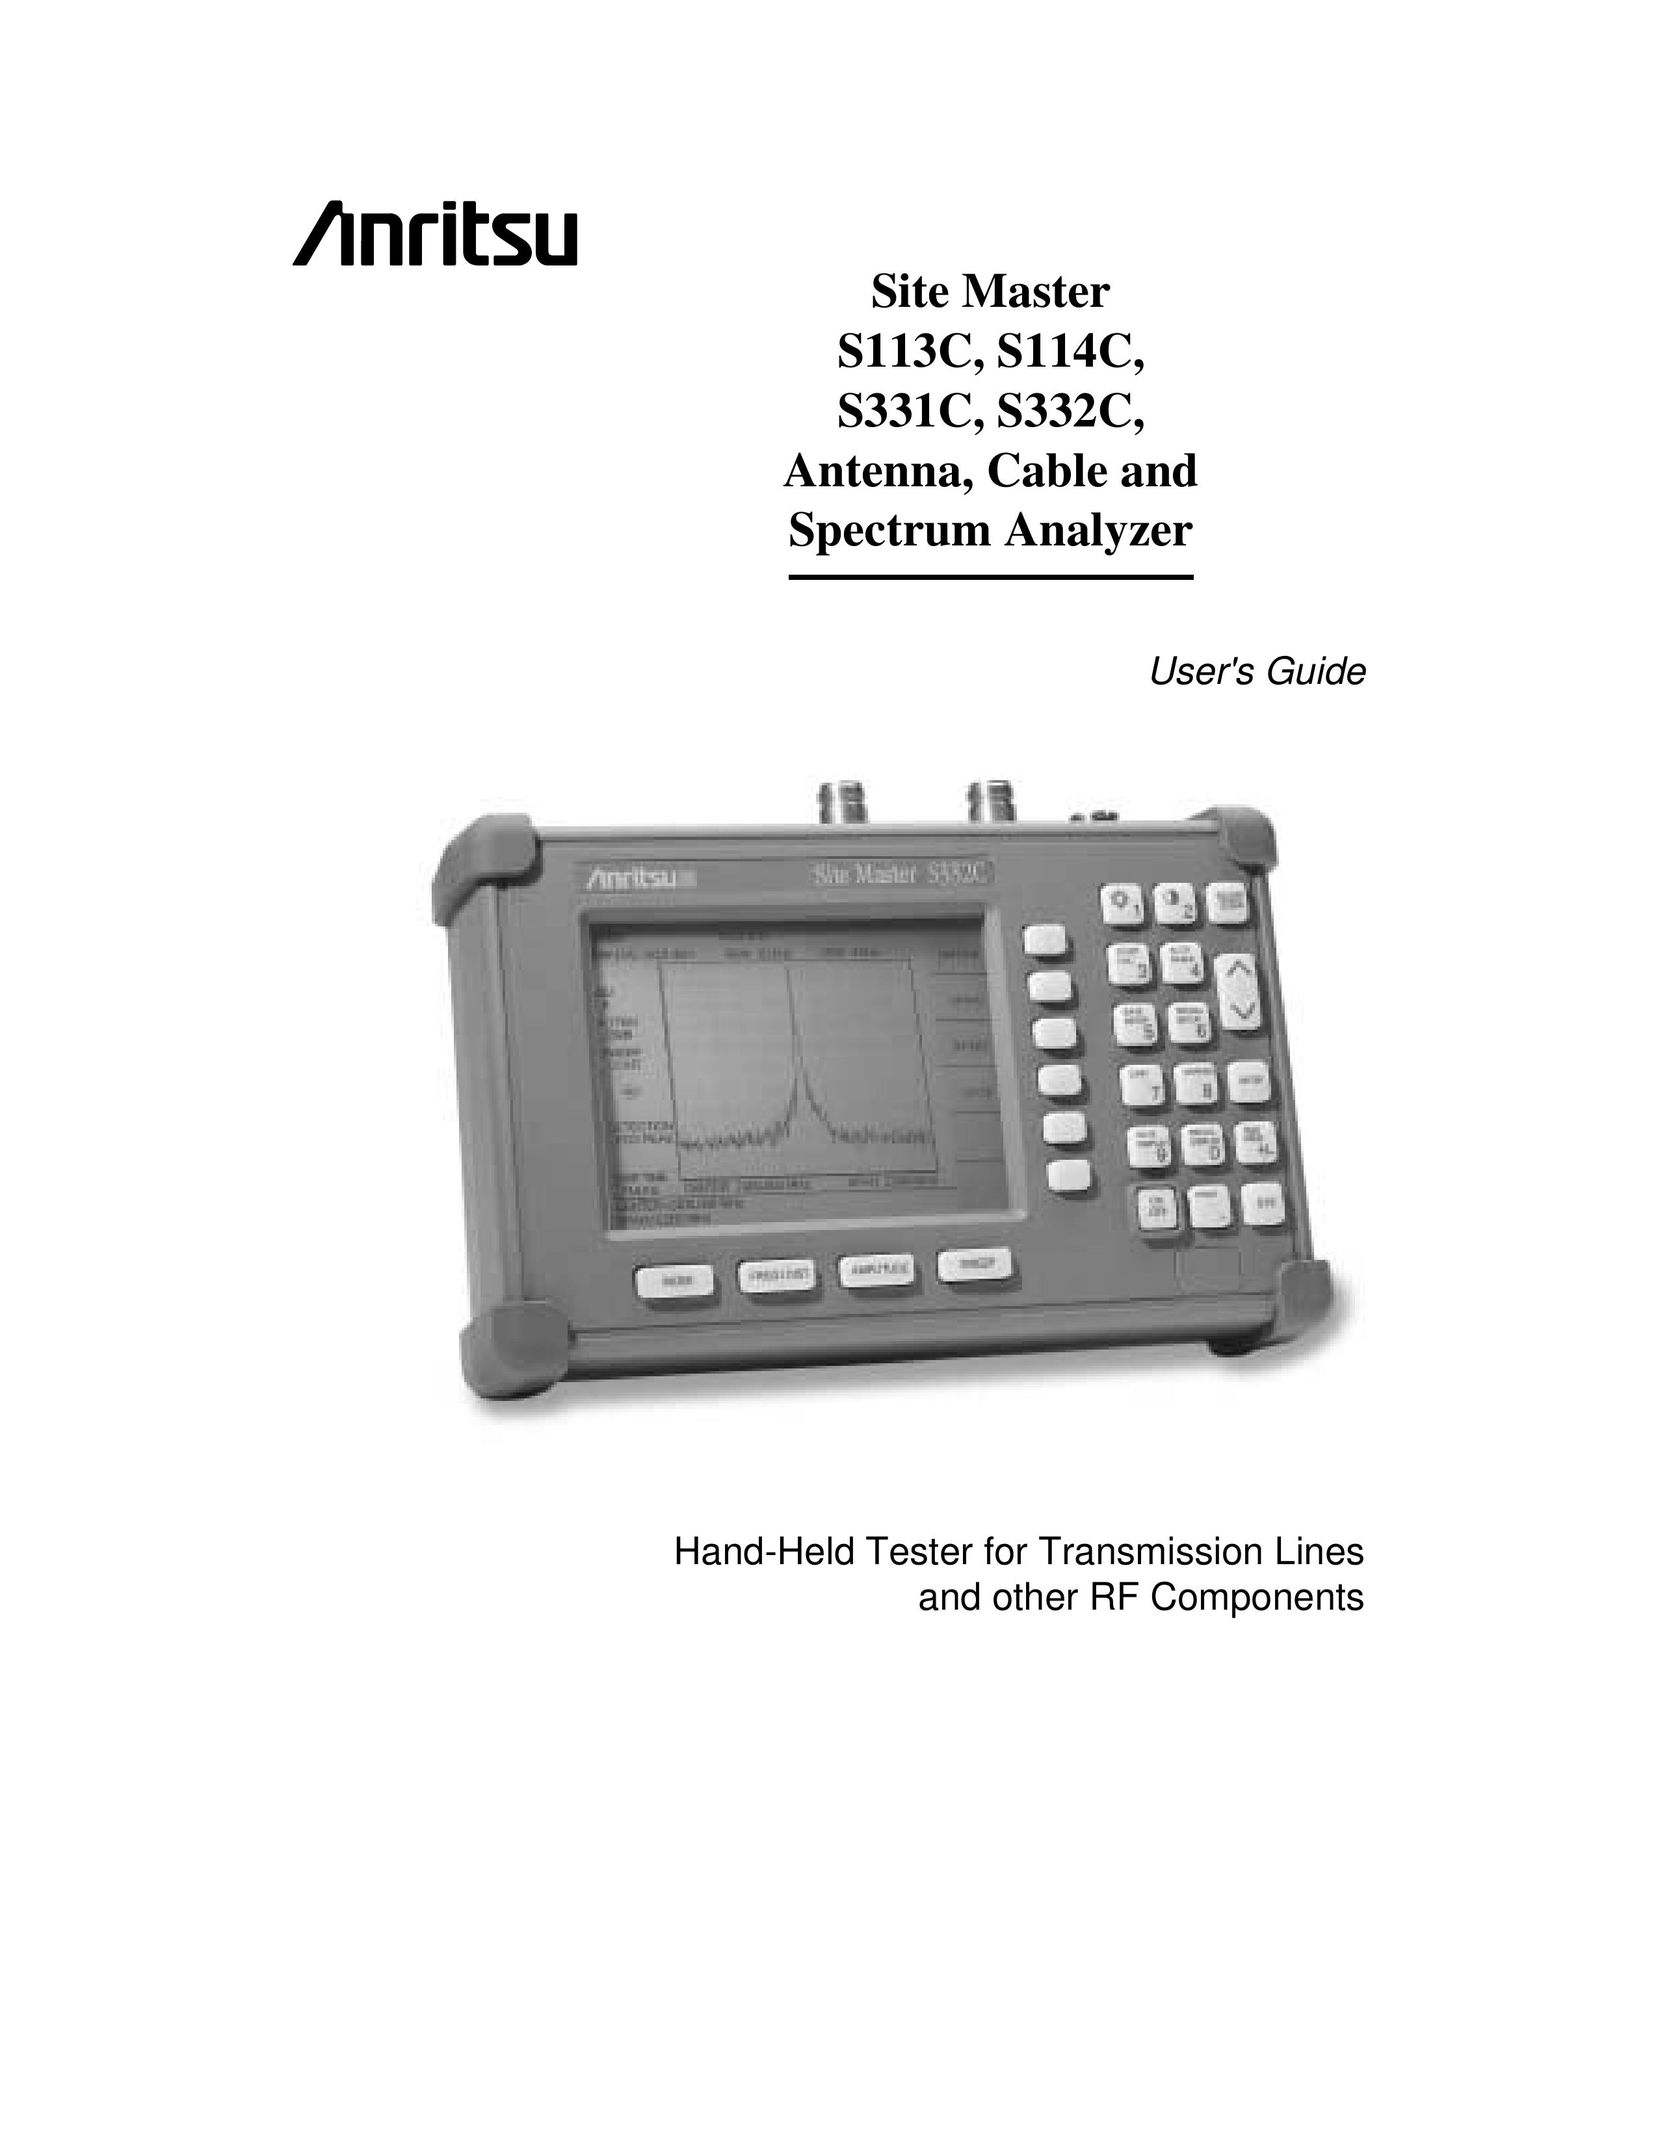 Anritsu S332C Stereo System User Manual